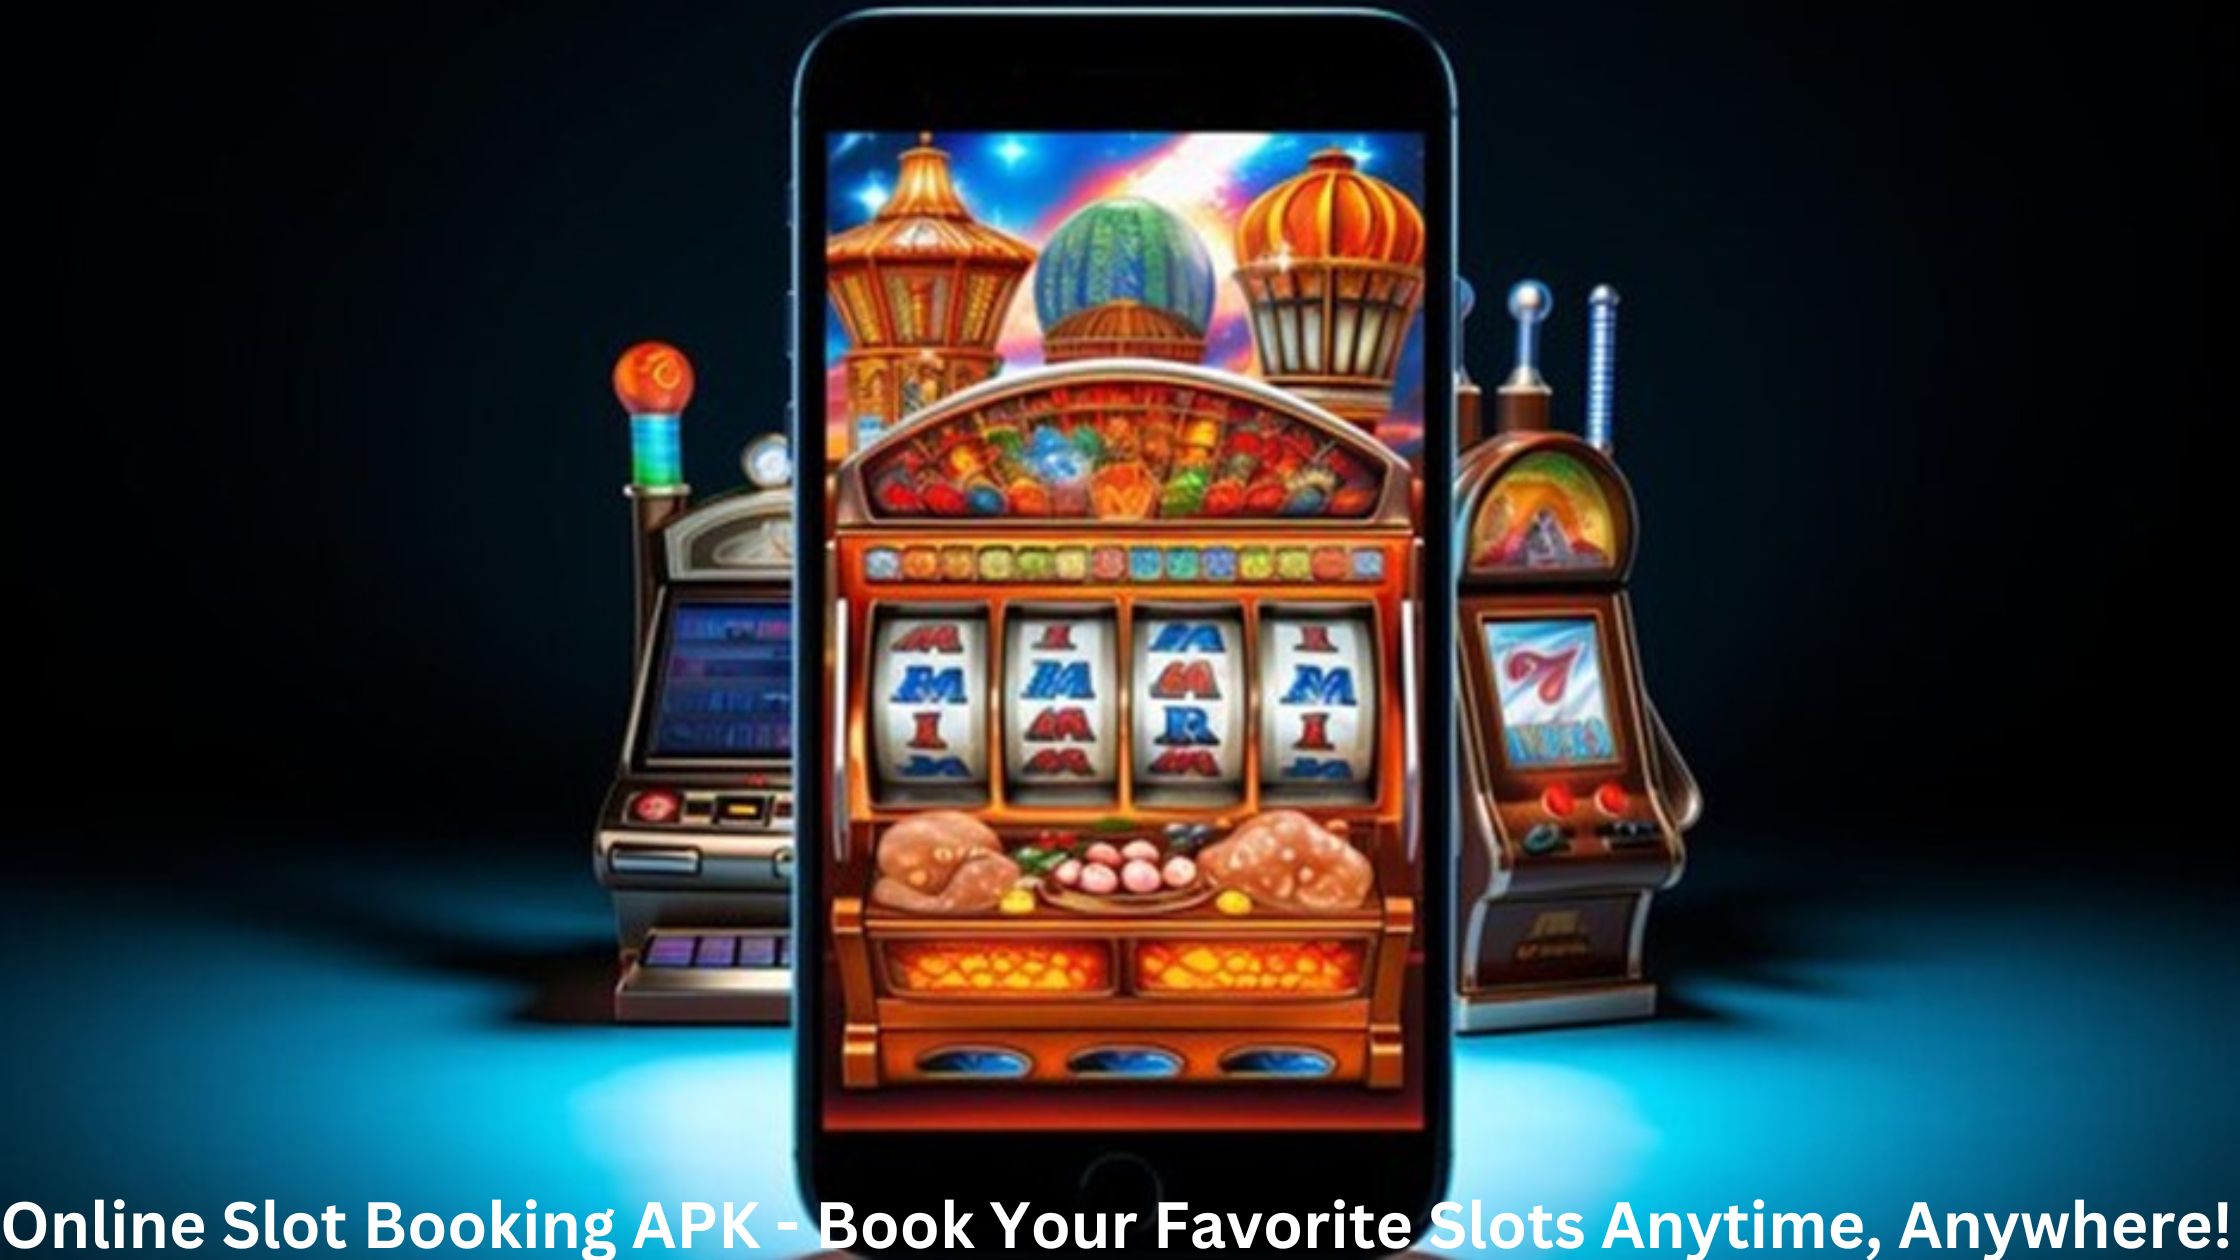 Online Slot Booking APK